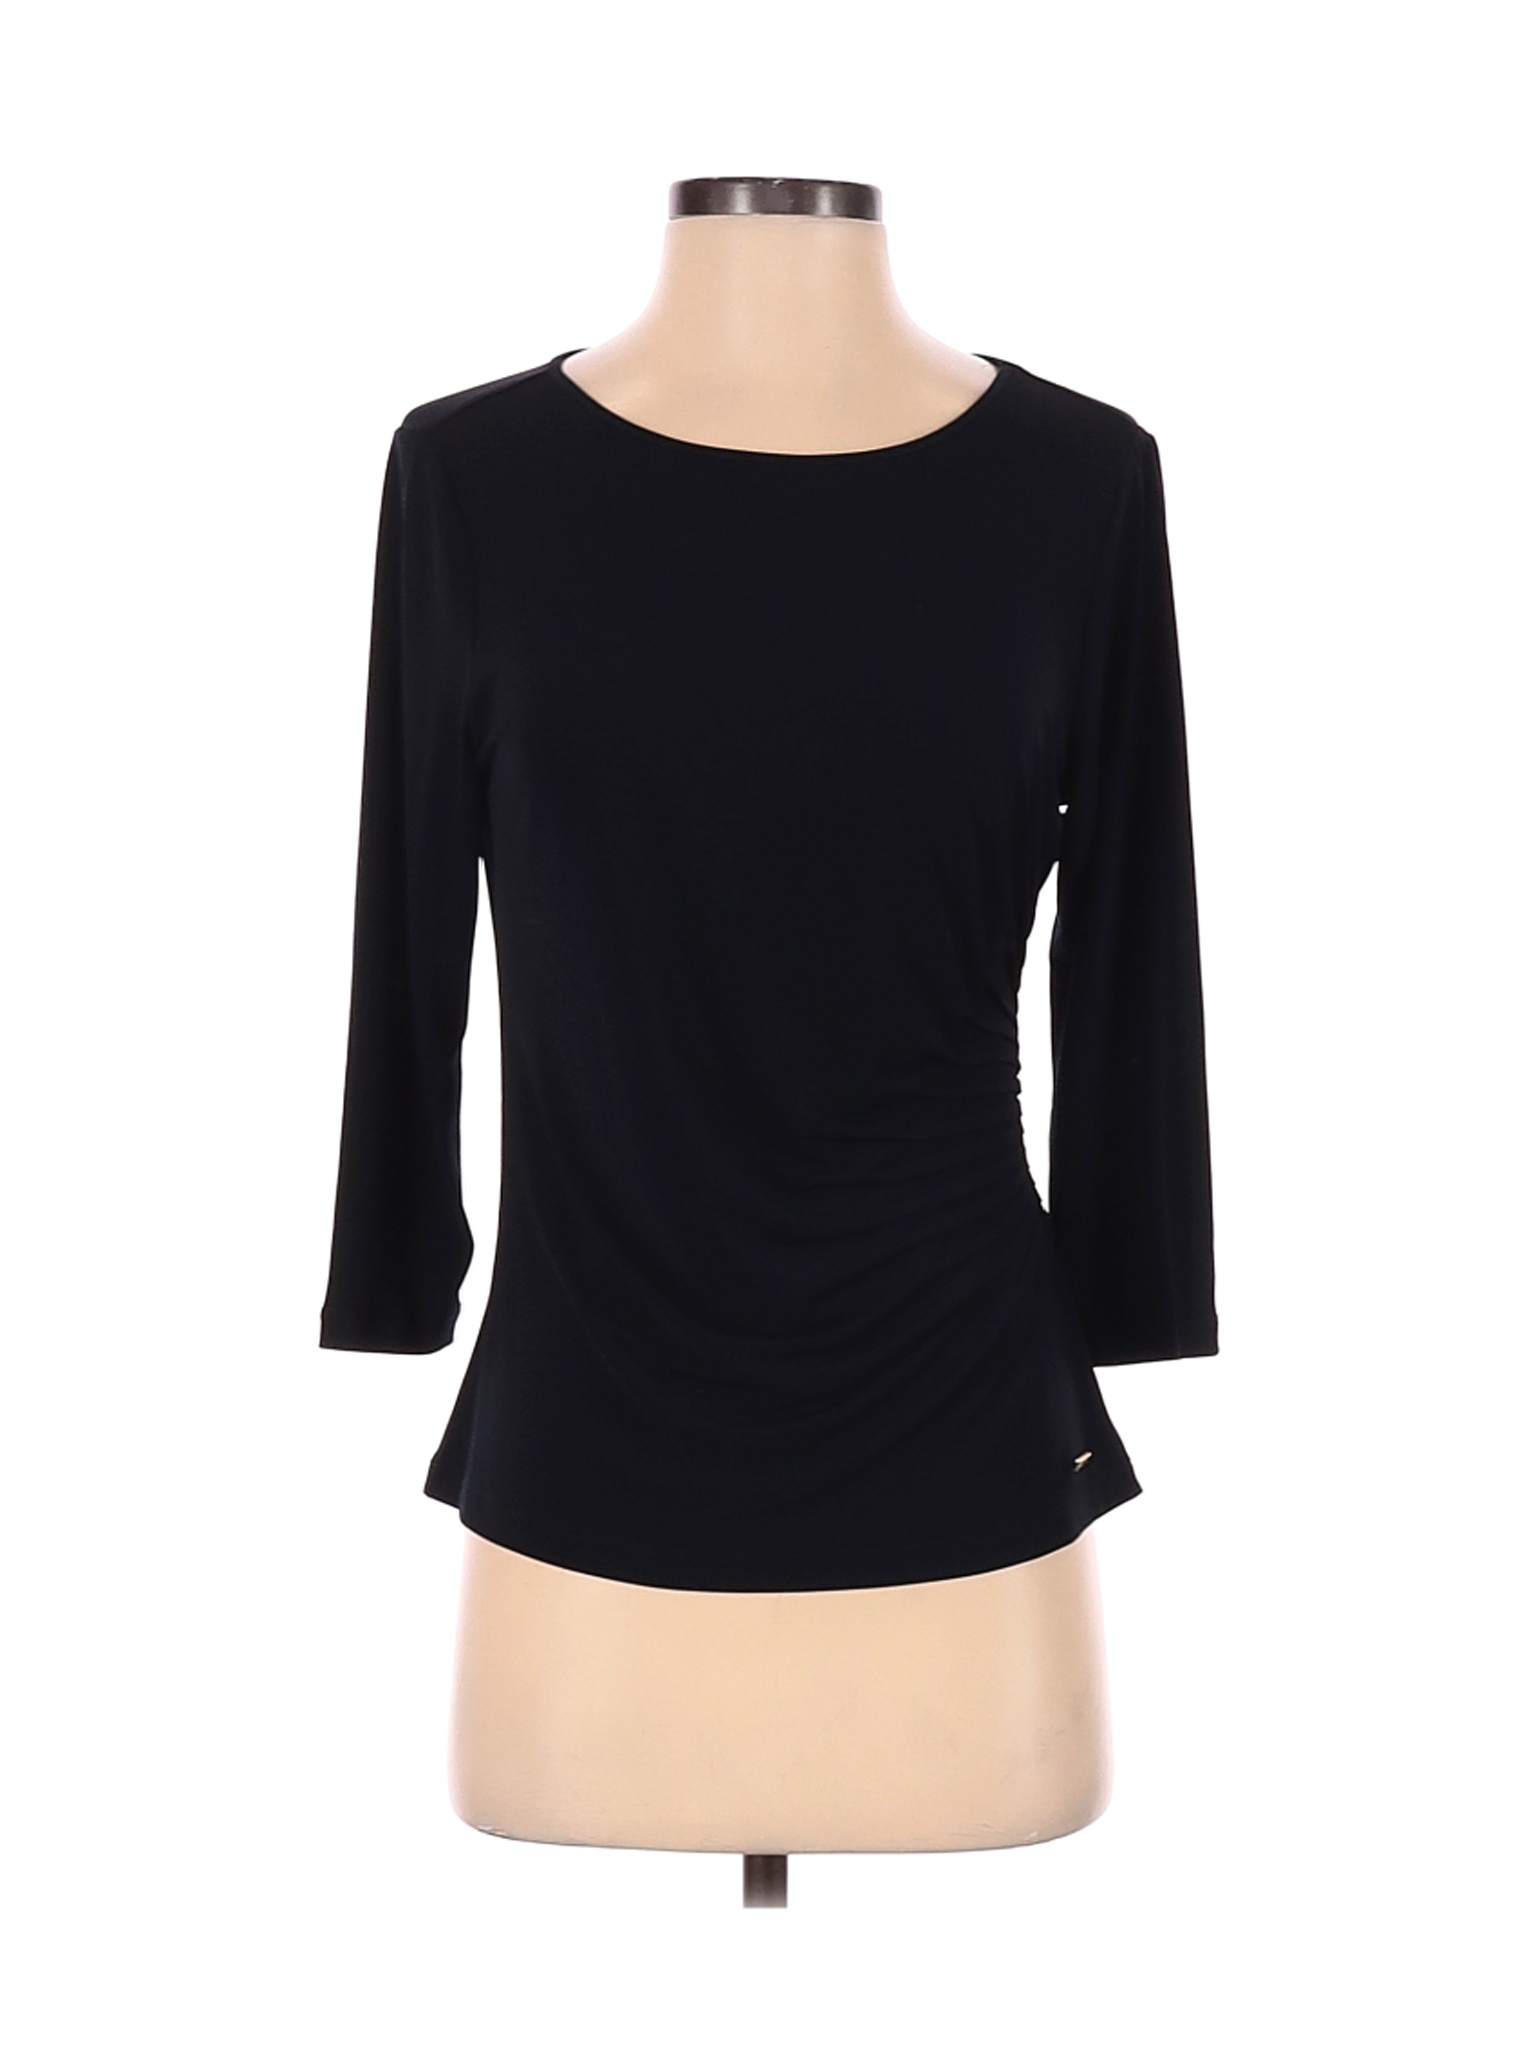 Calvin Klein Women Black 3/4 Sleeve Top S | eBay